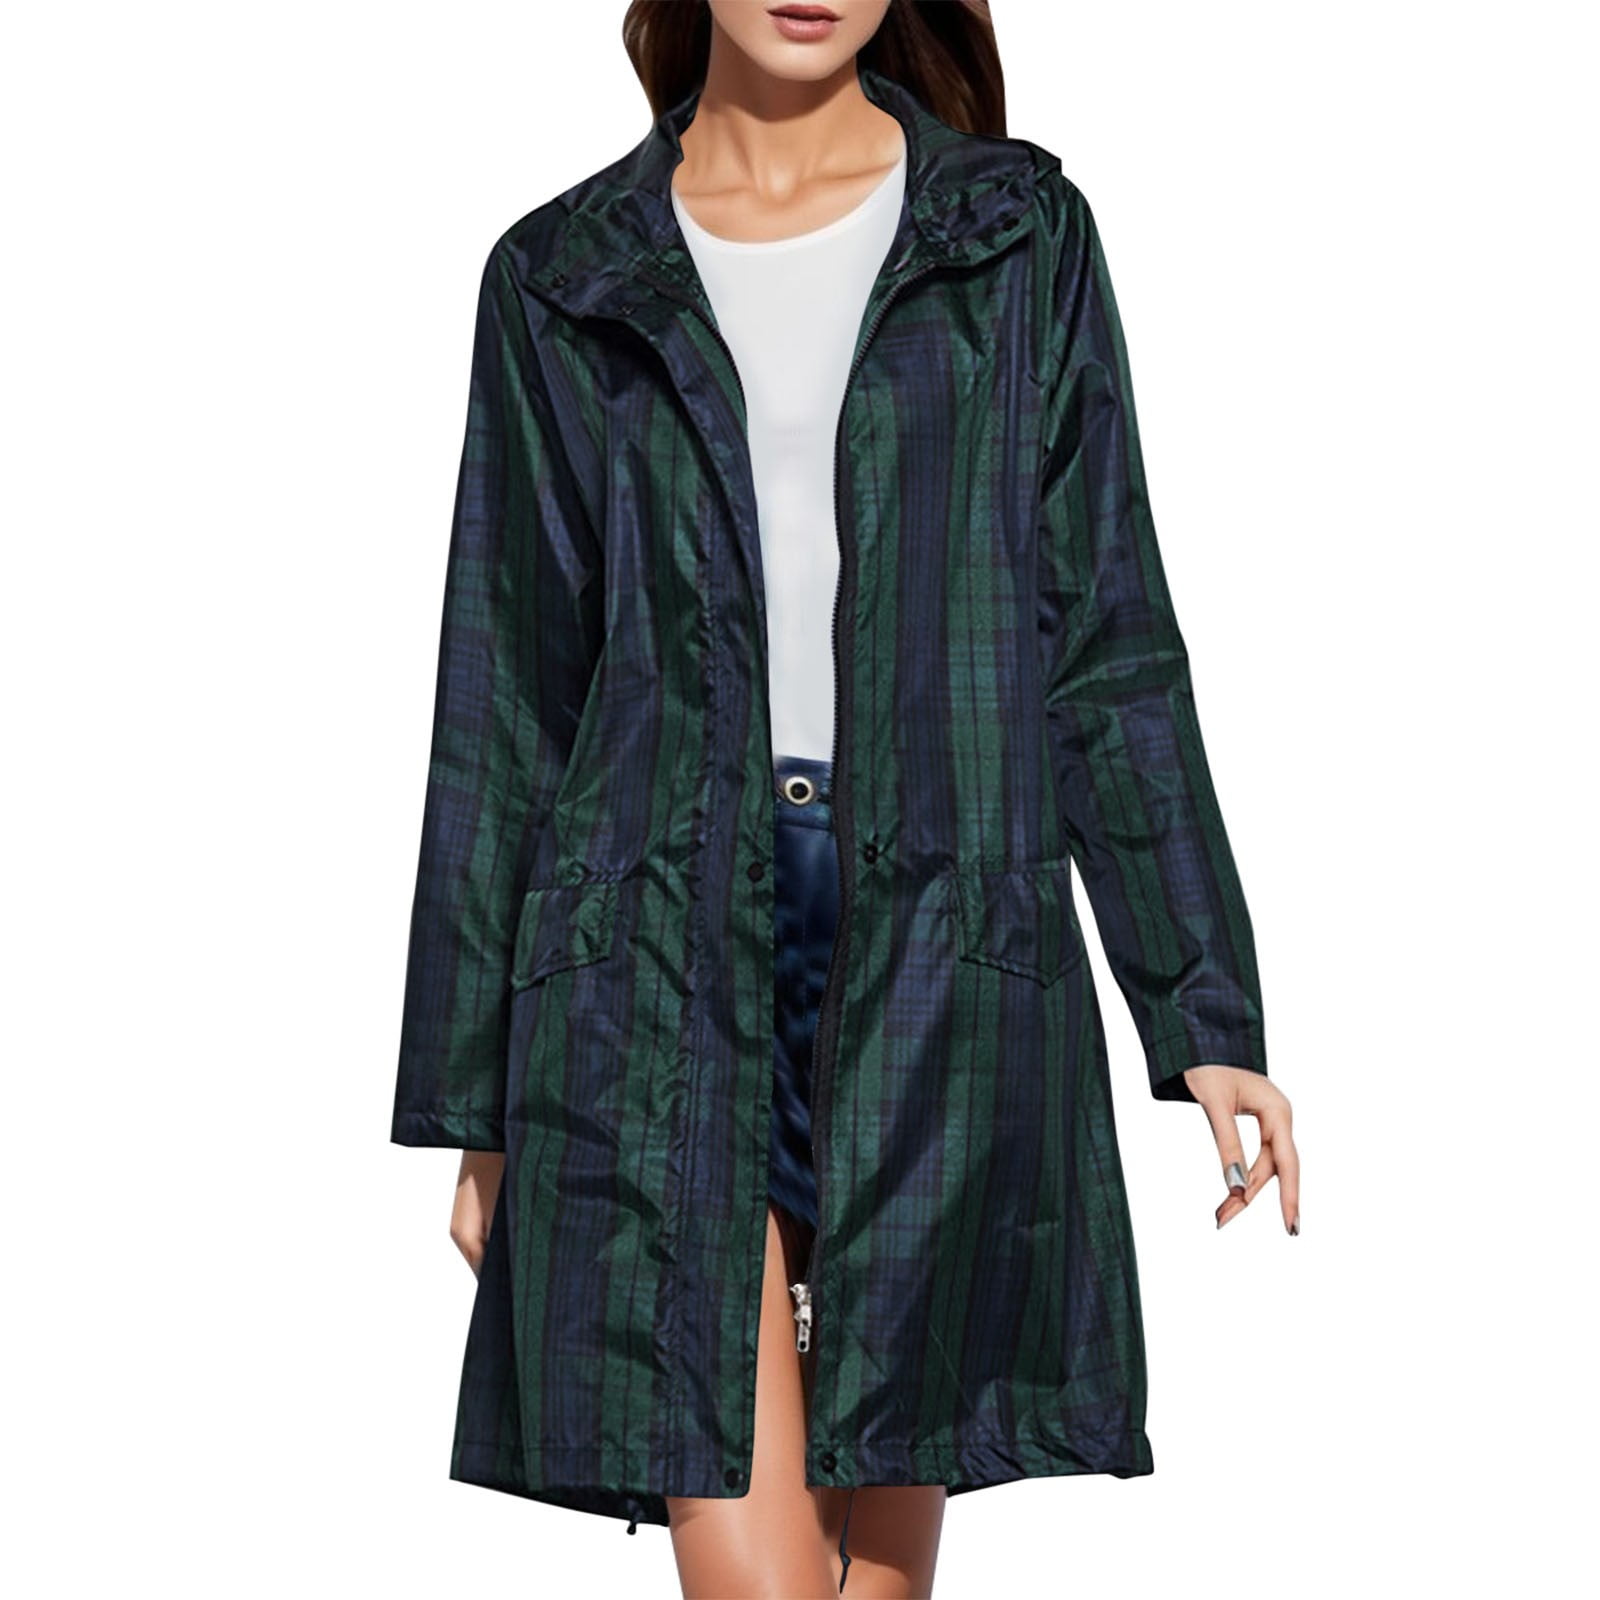 Female Jacket Dot Printed Rain Jacket With Hood Lightweight Long Sleeve ...